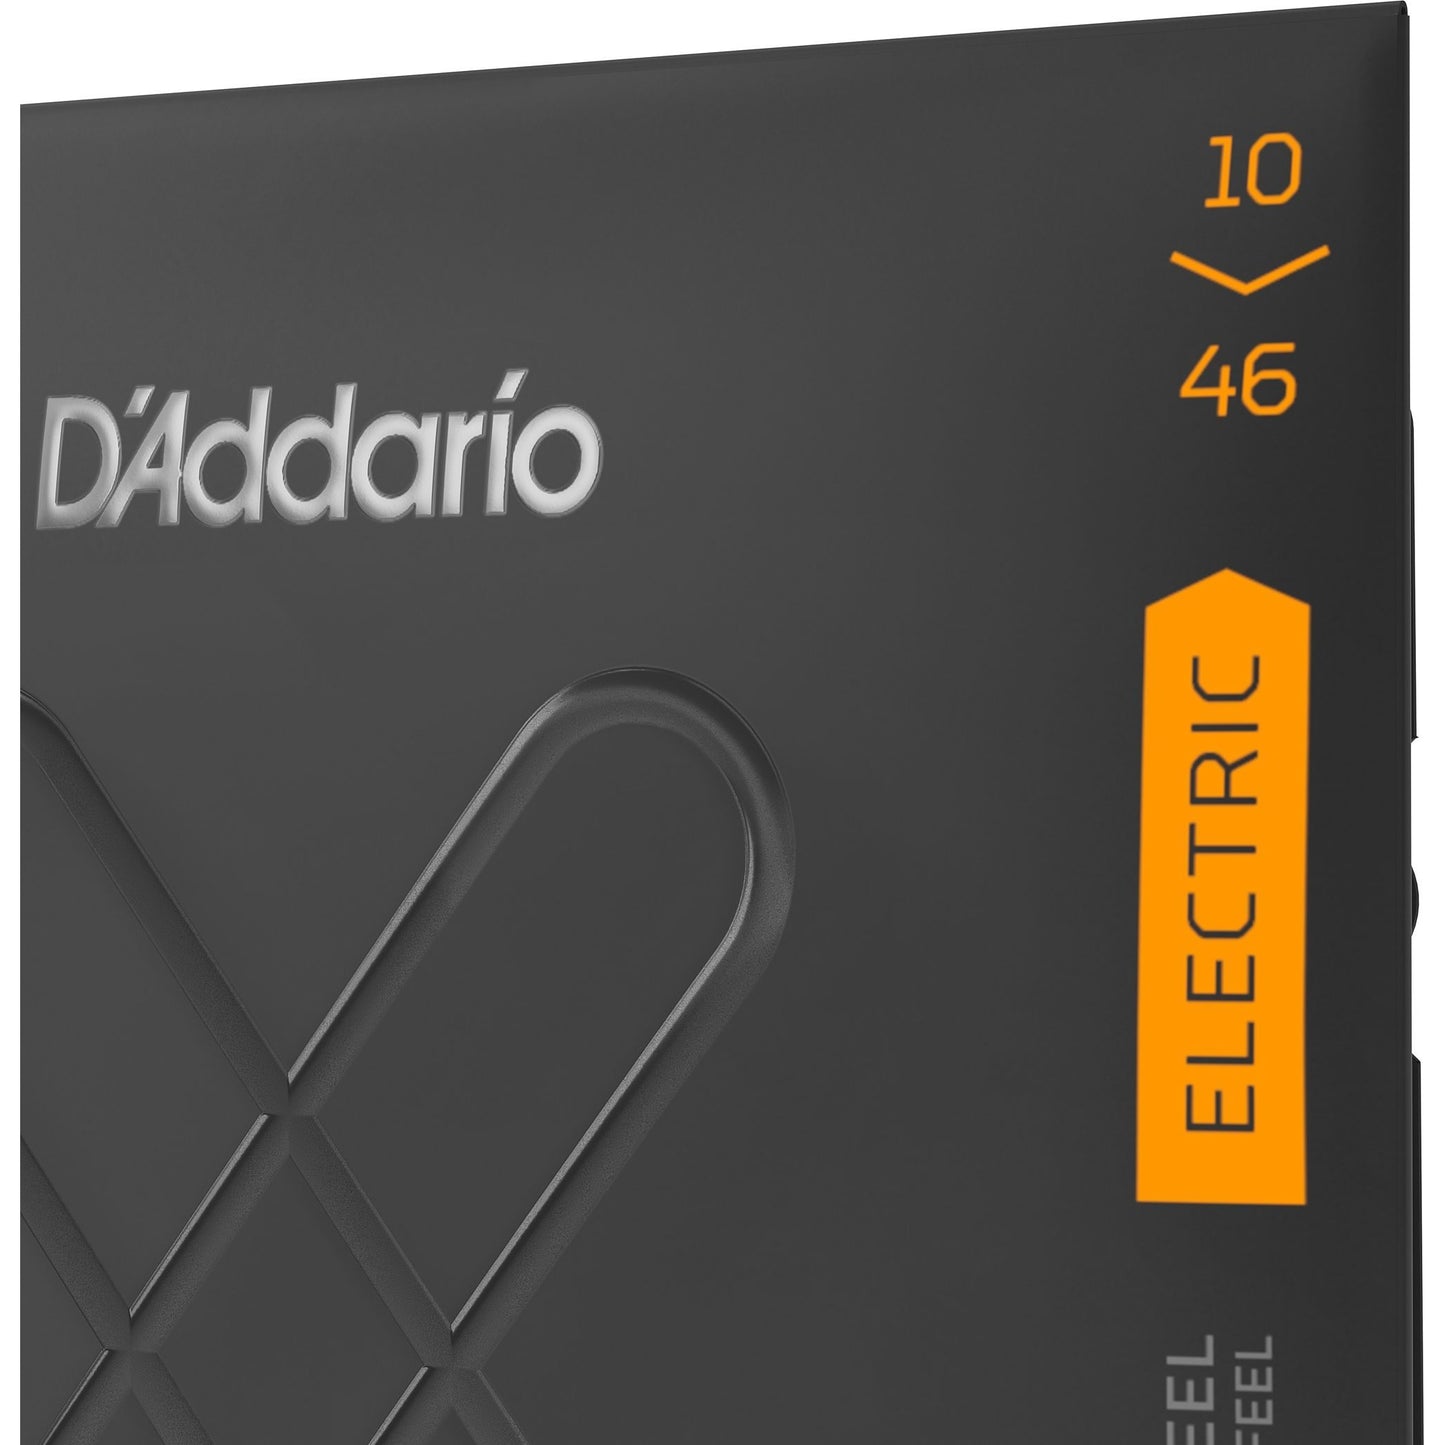 D'Addario XTE1046 Regular Light Electric Nickel Plated Steel Electric Guitar Strings